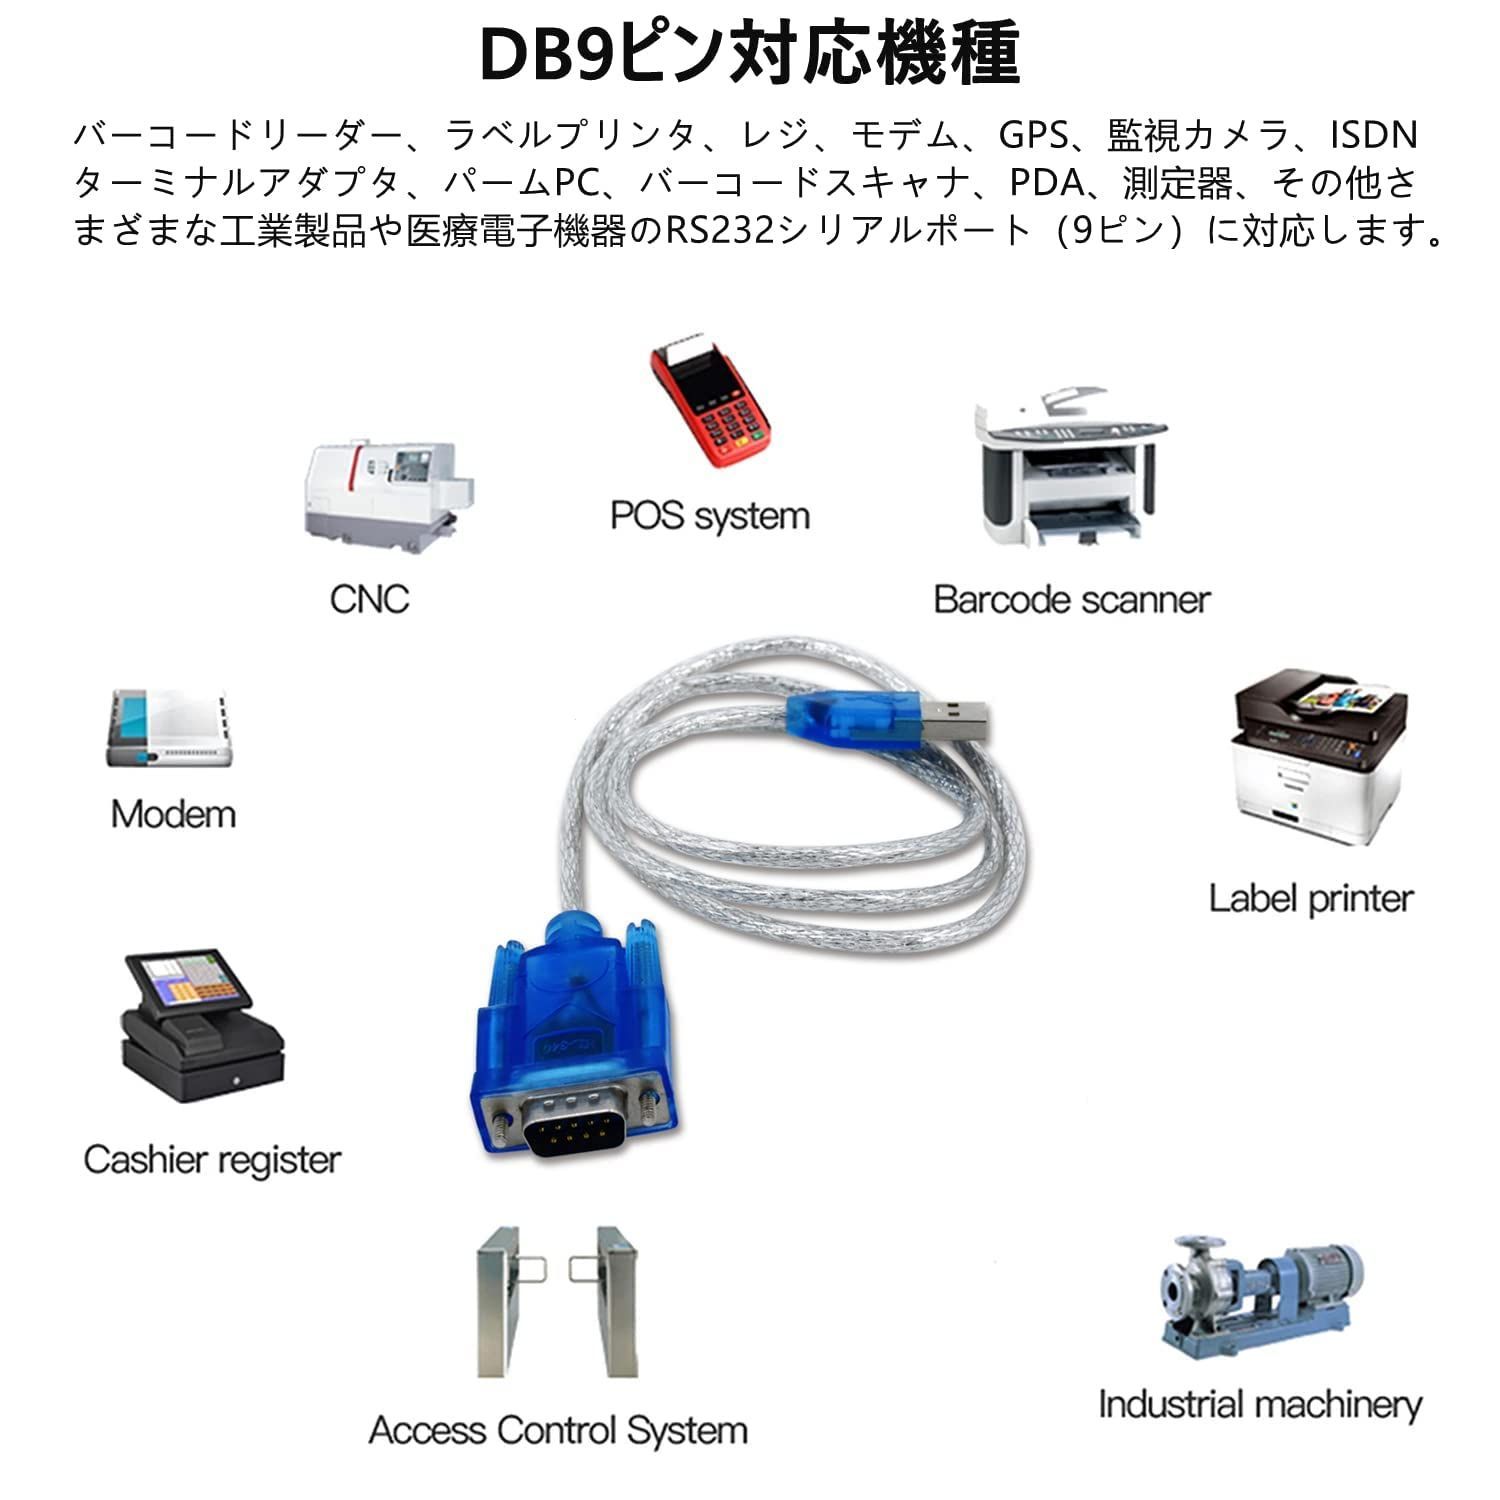 YFFSFDC RS232C USB シリアル変換ケーブル RS232 USB 9ピン 変換 シリアルケーブル USBオス DB9オス US